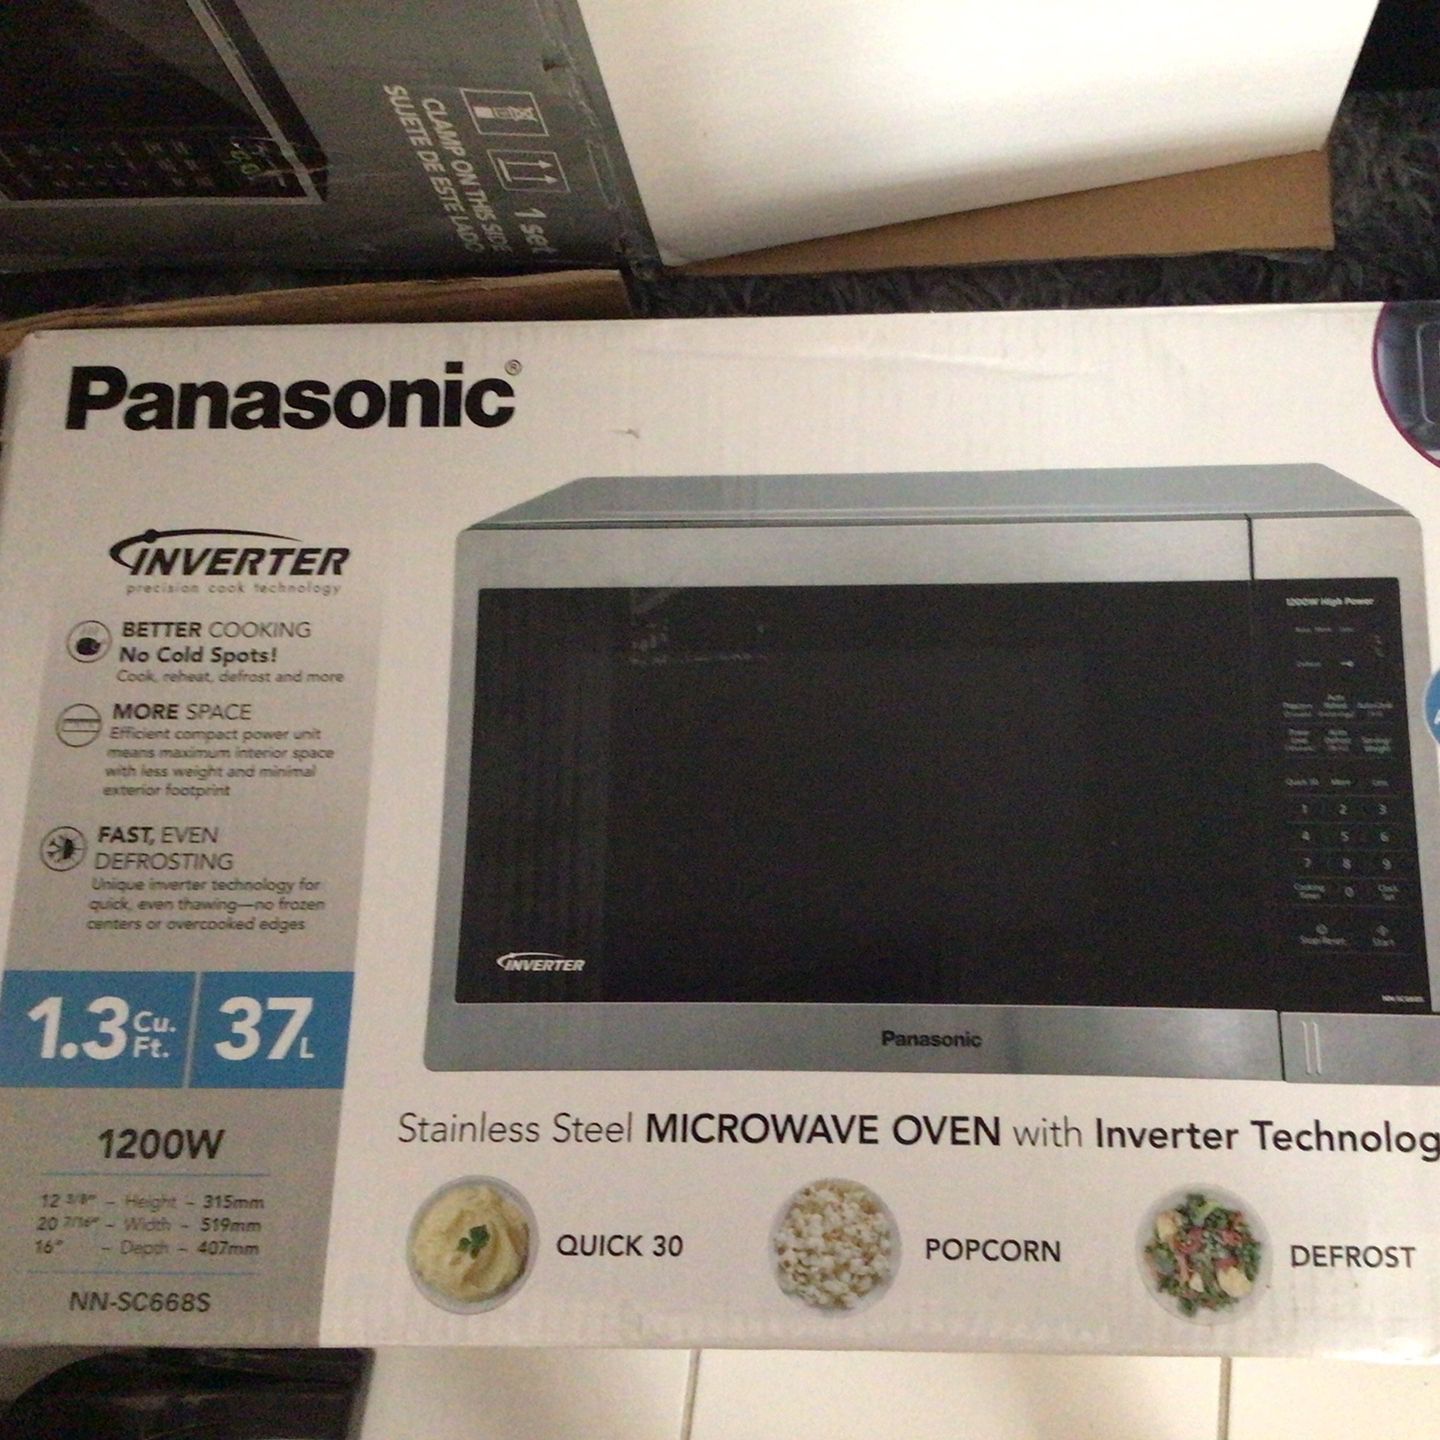 Brand new Panasonic Microwave Oven